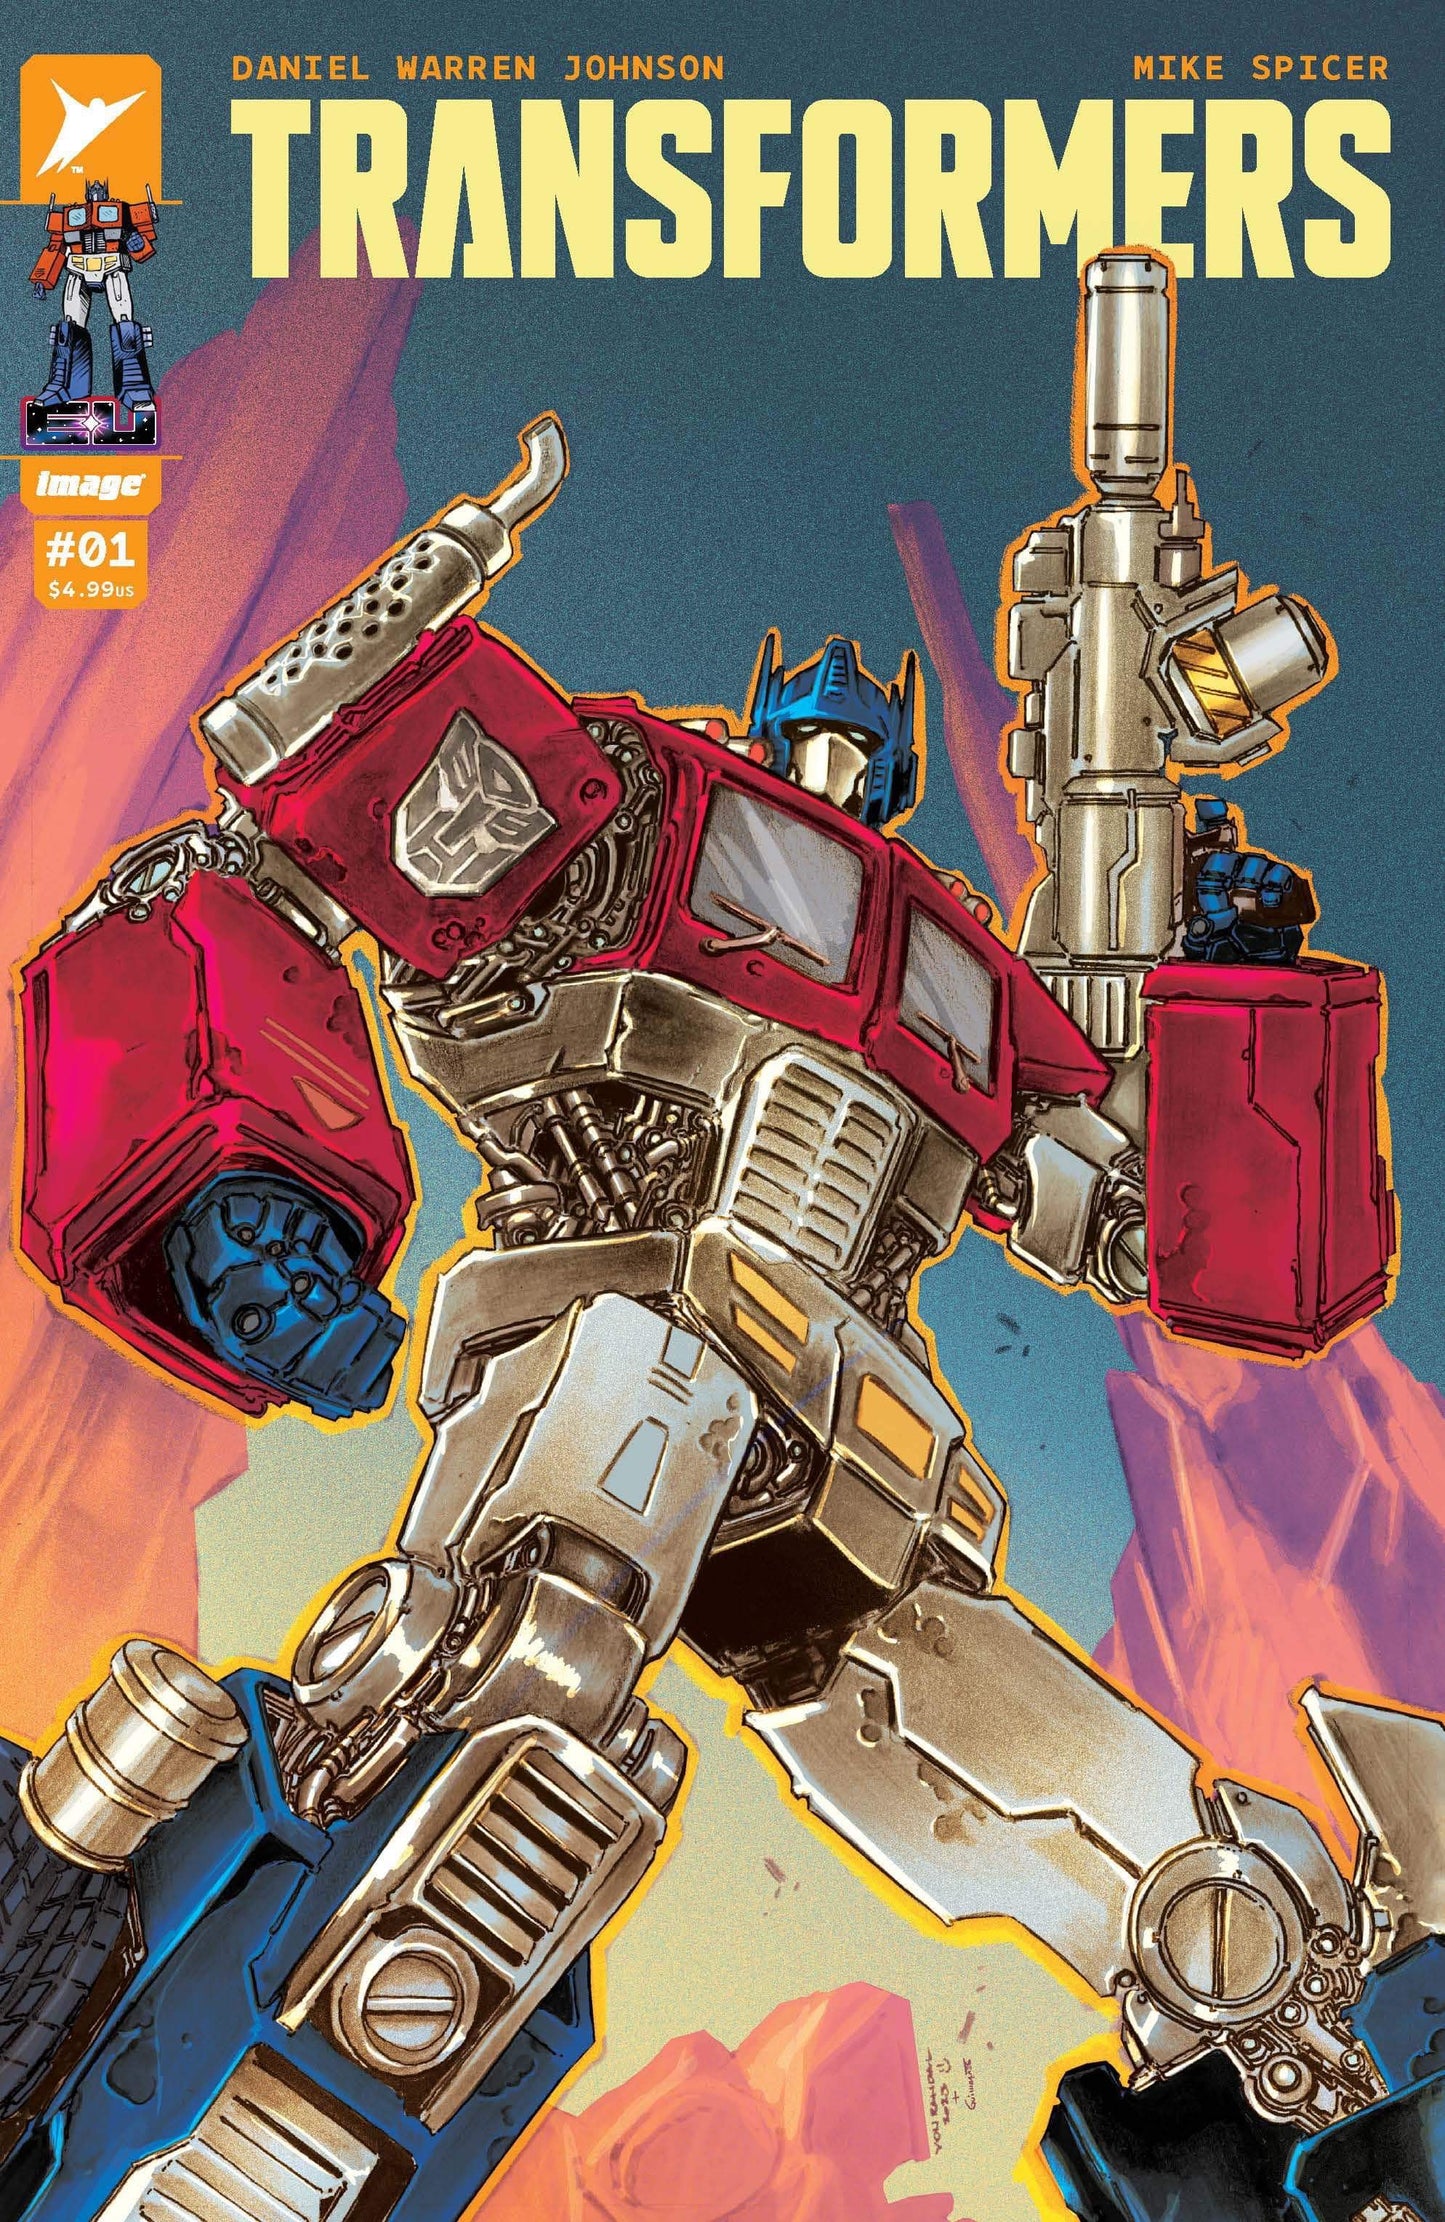 Transformers #1 by Von Randal